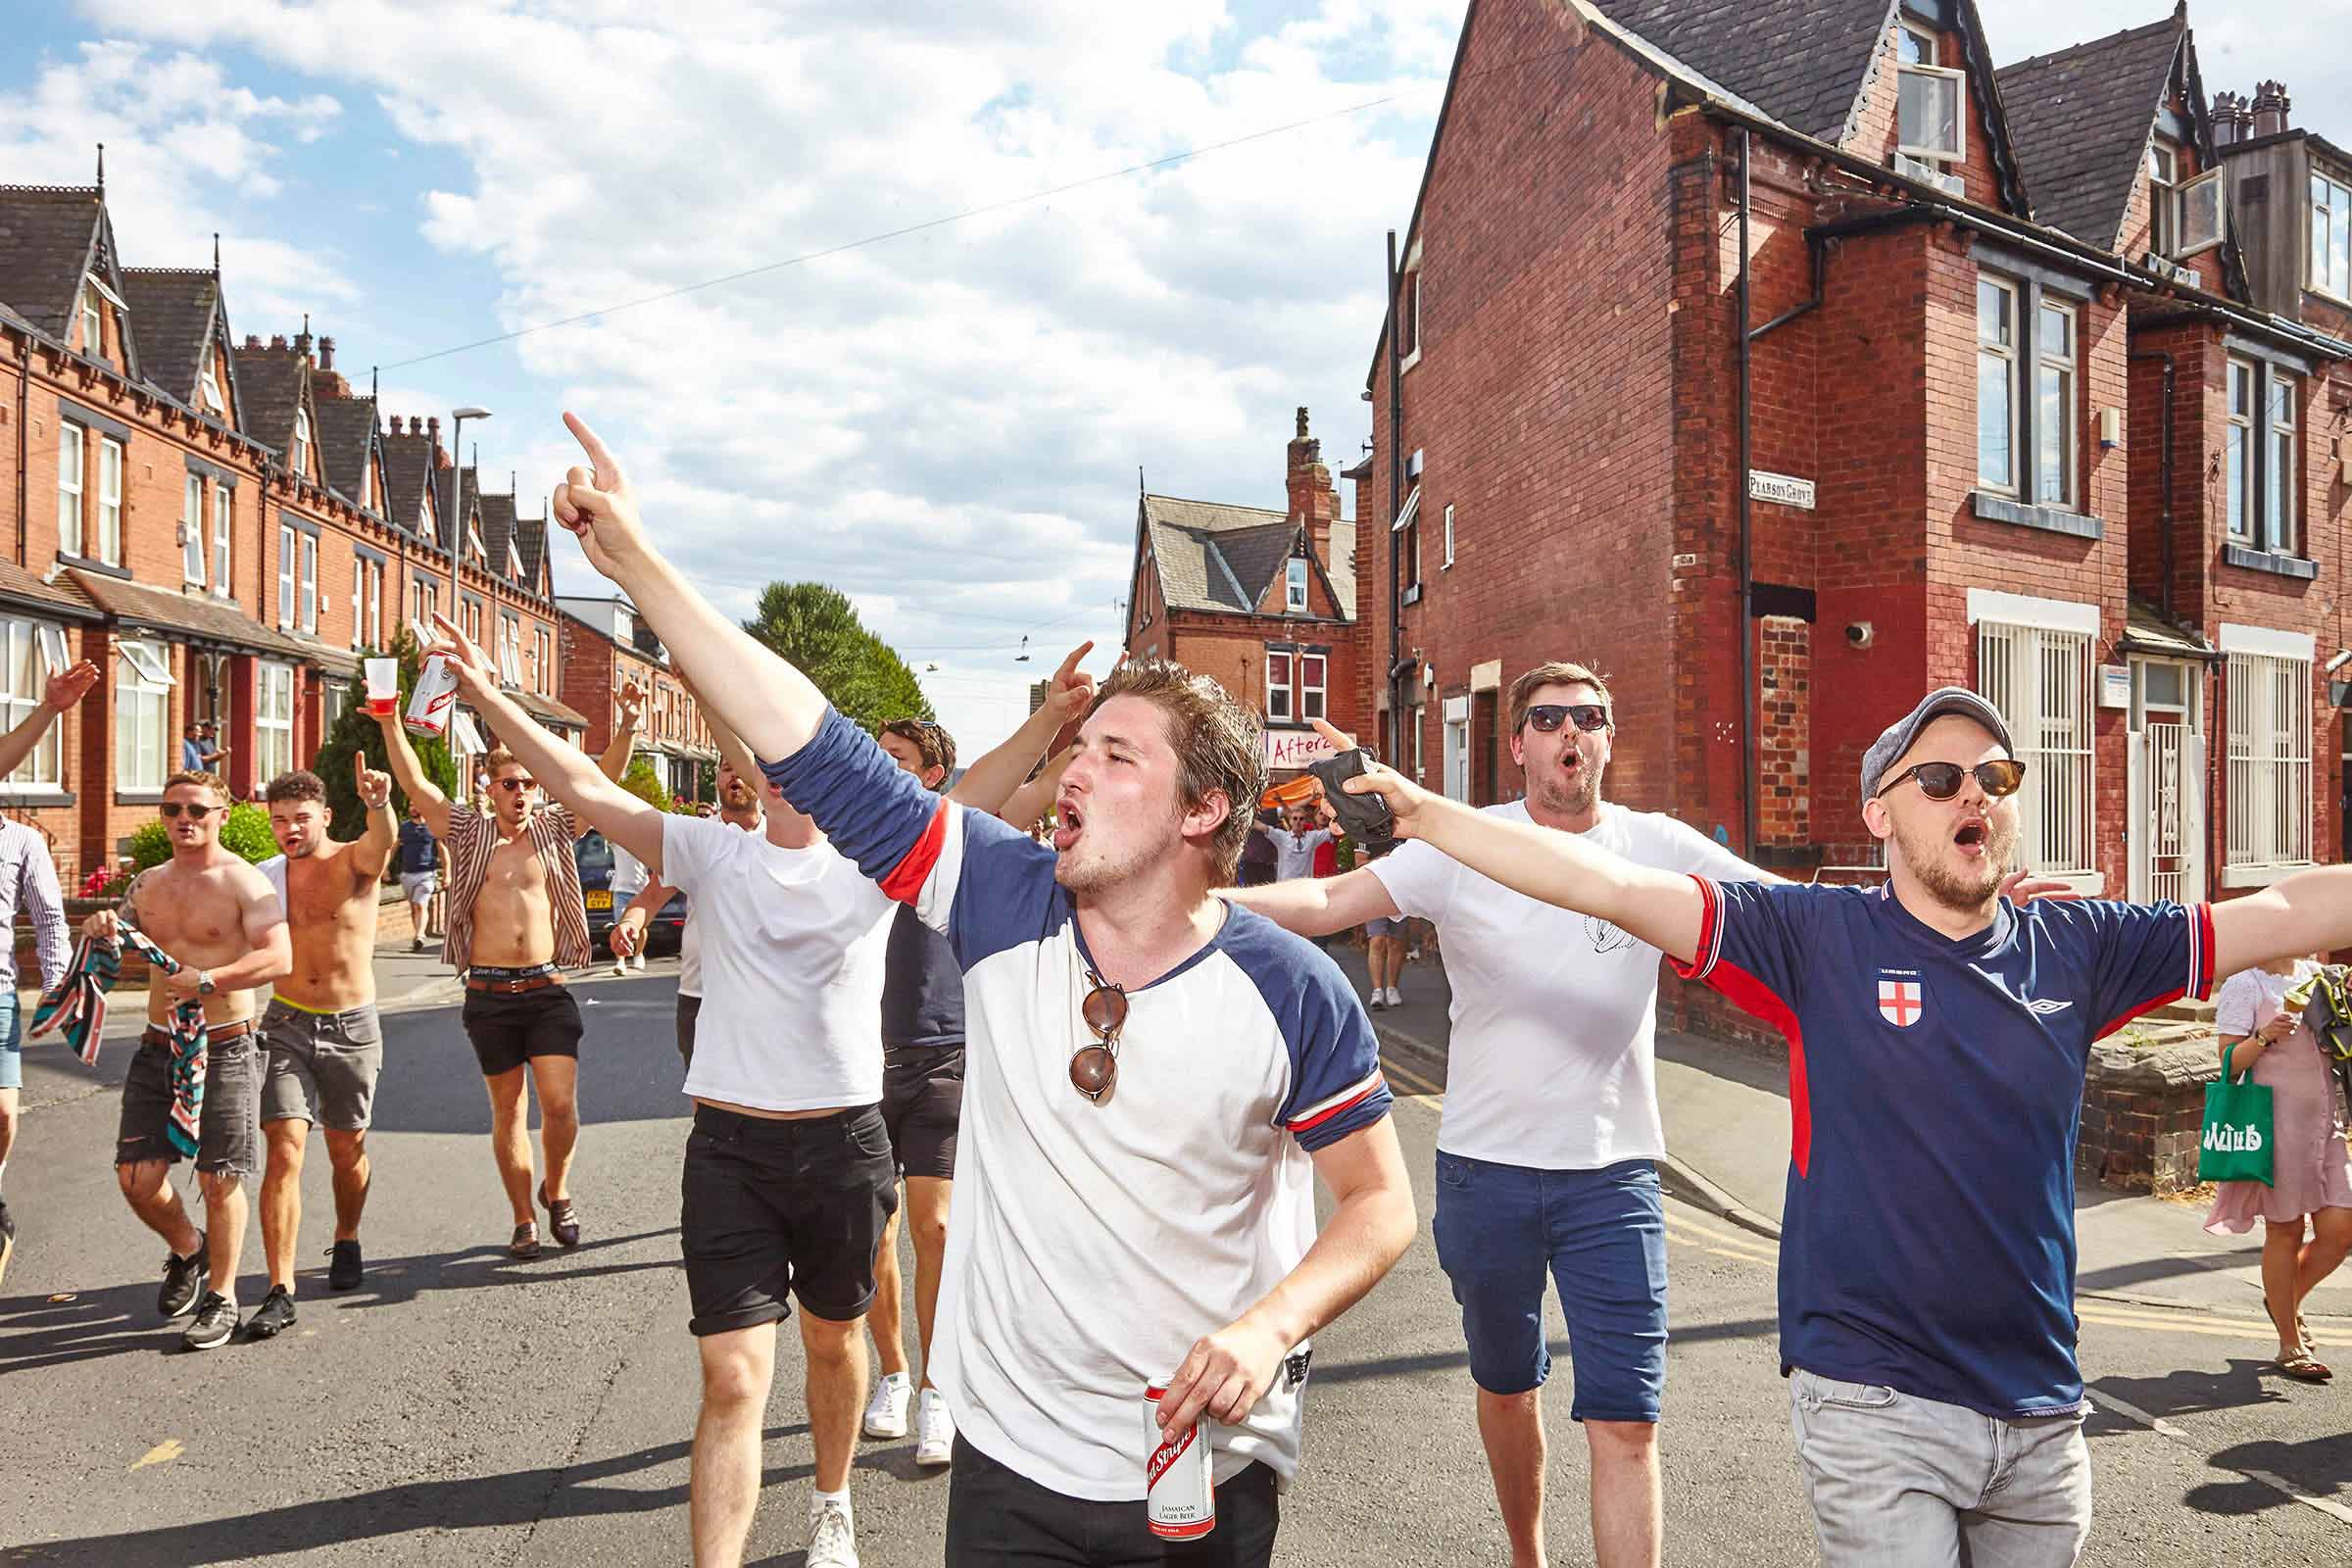 England Fans Celebrating After World Cup 2018 Quarterfinal Victory vs Sweden in Leeds